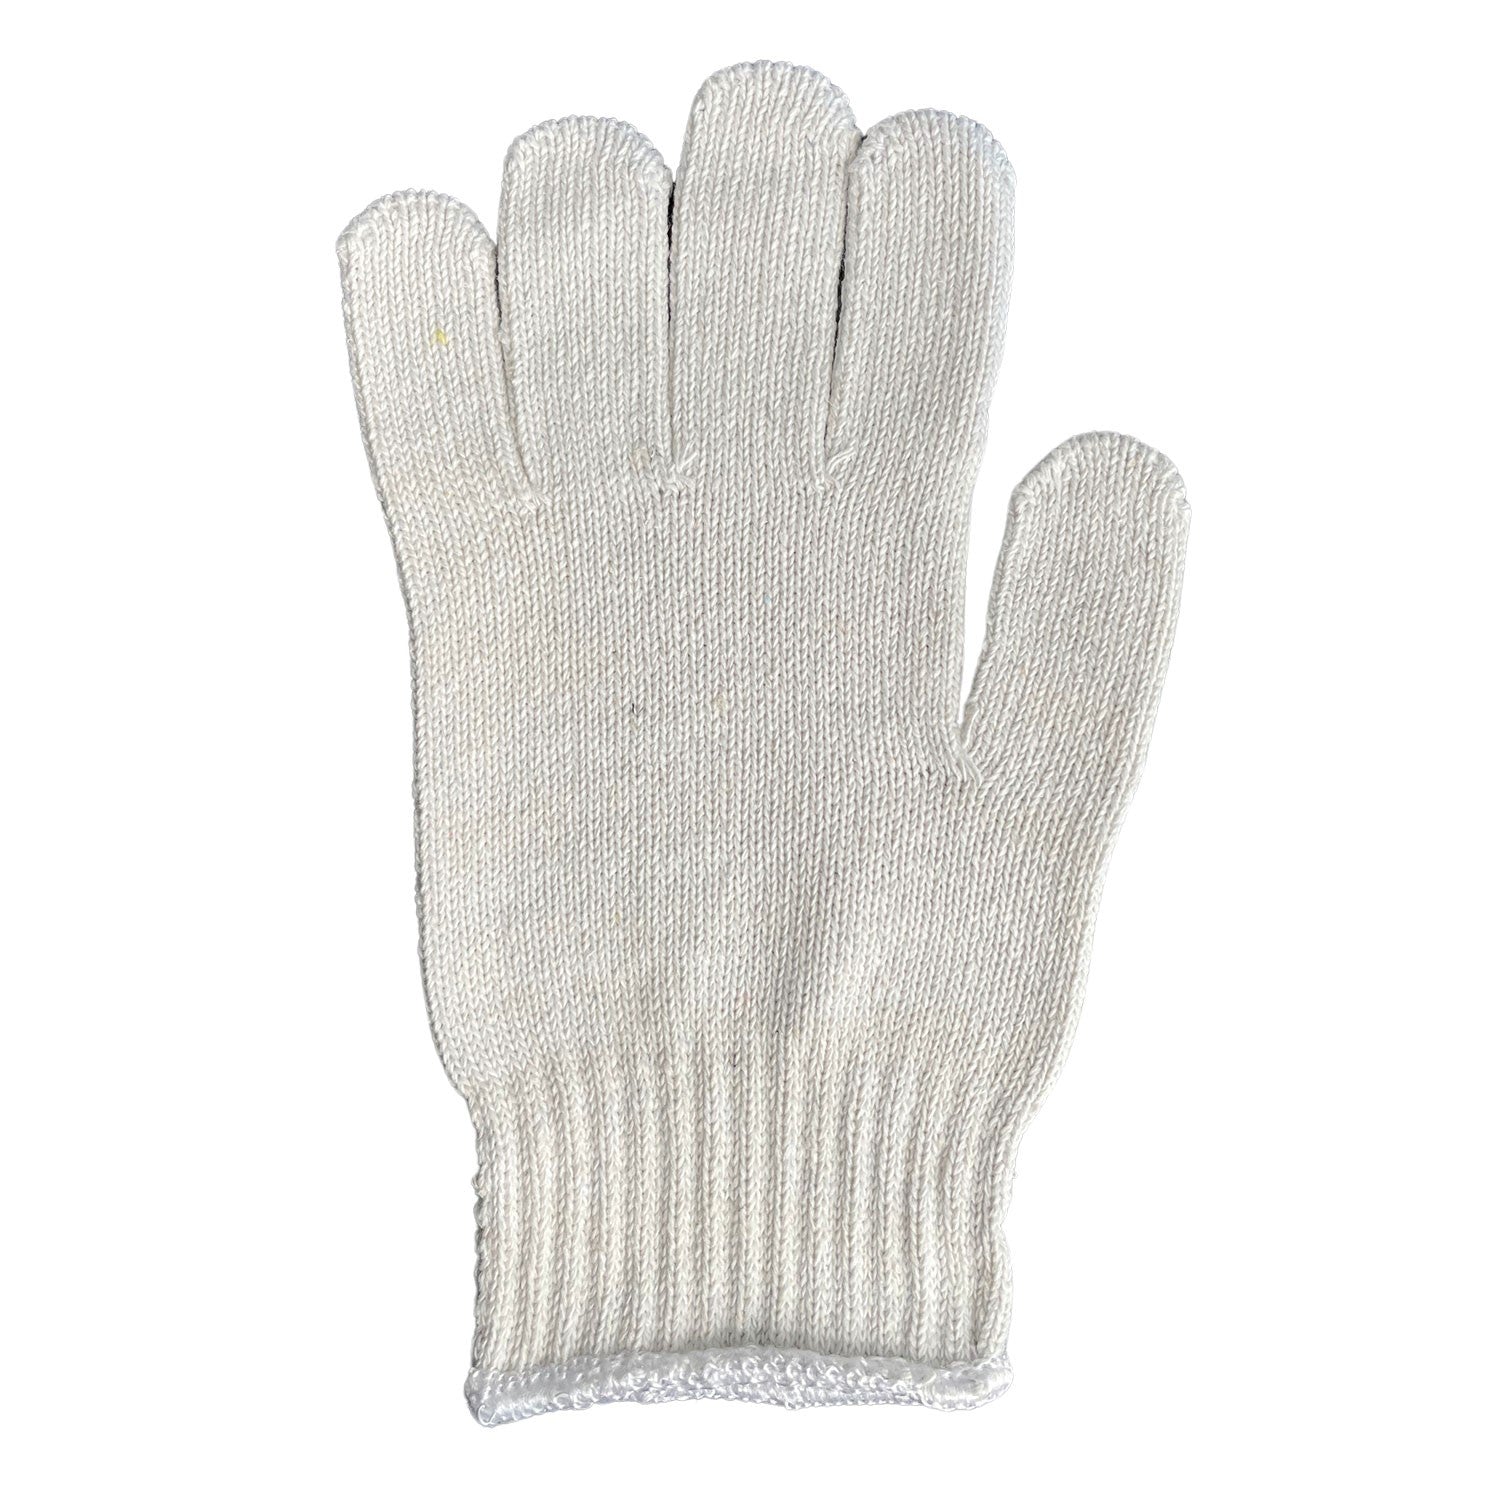 Heavyweight Cotton Butcher Glove, 12 pack - Large